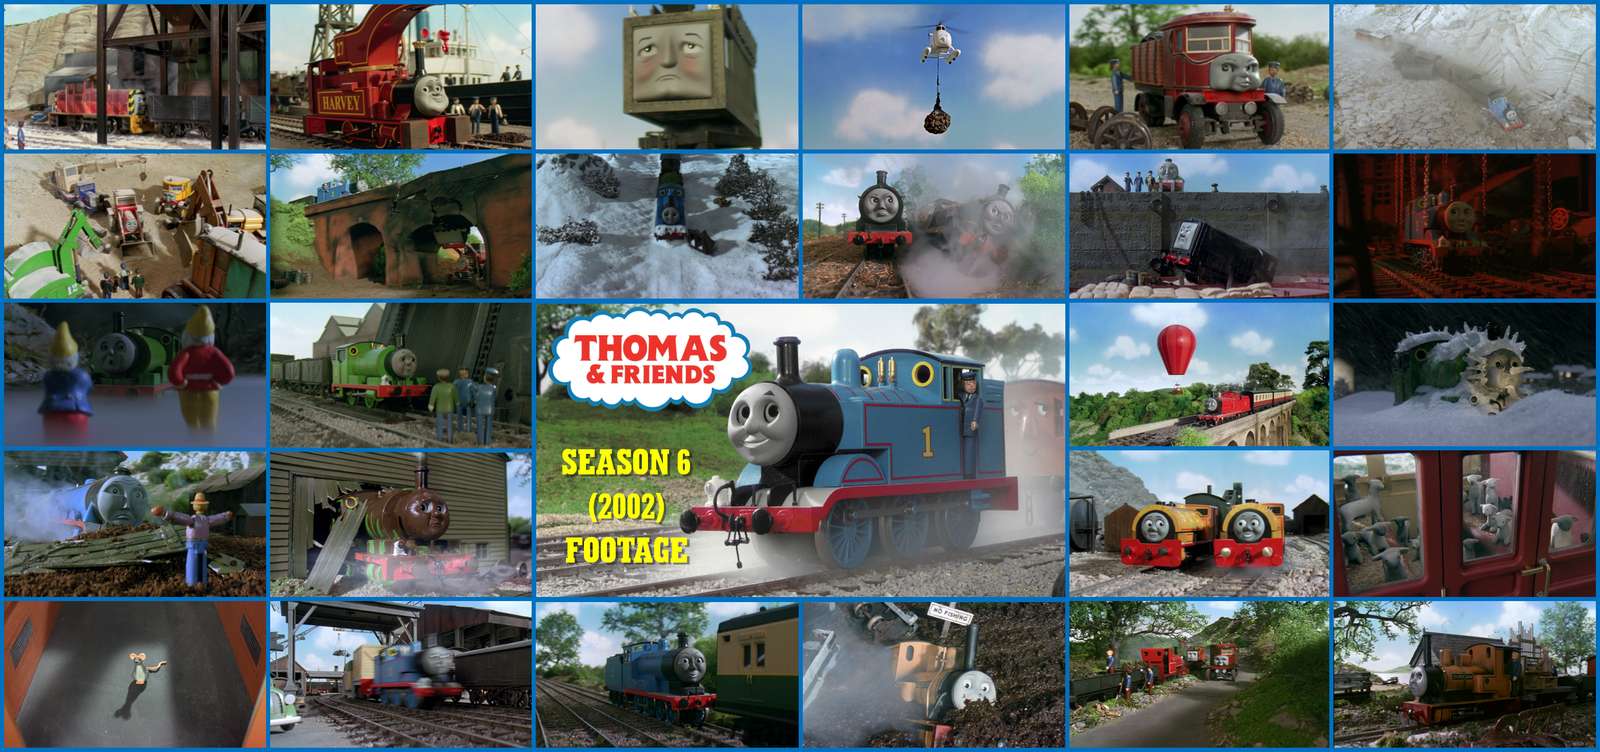 Thomas, a tankmotor 6. évad puzzle online fotóról